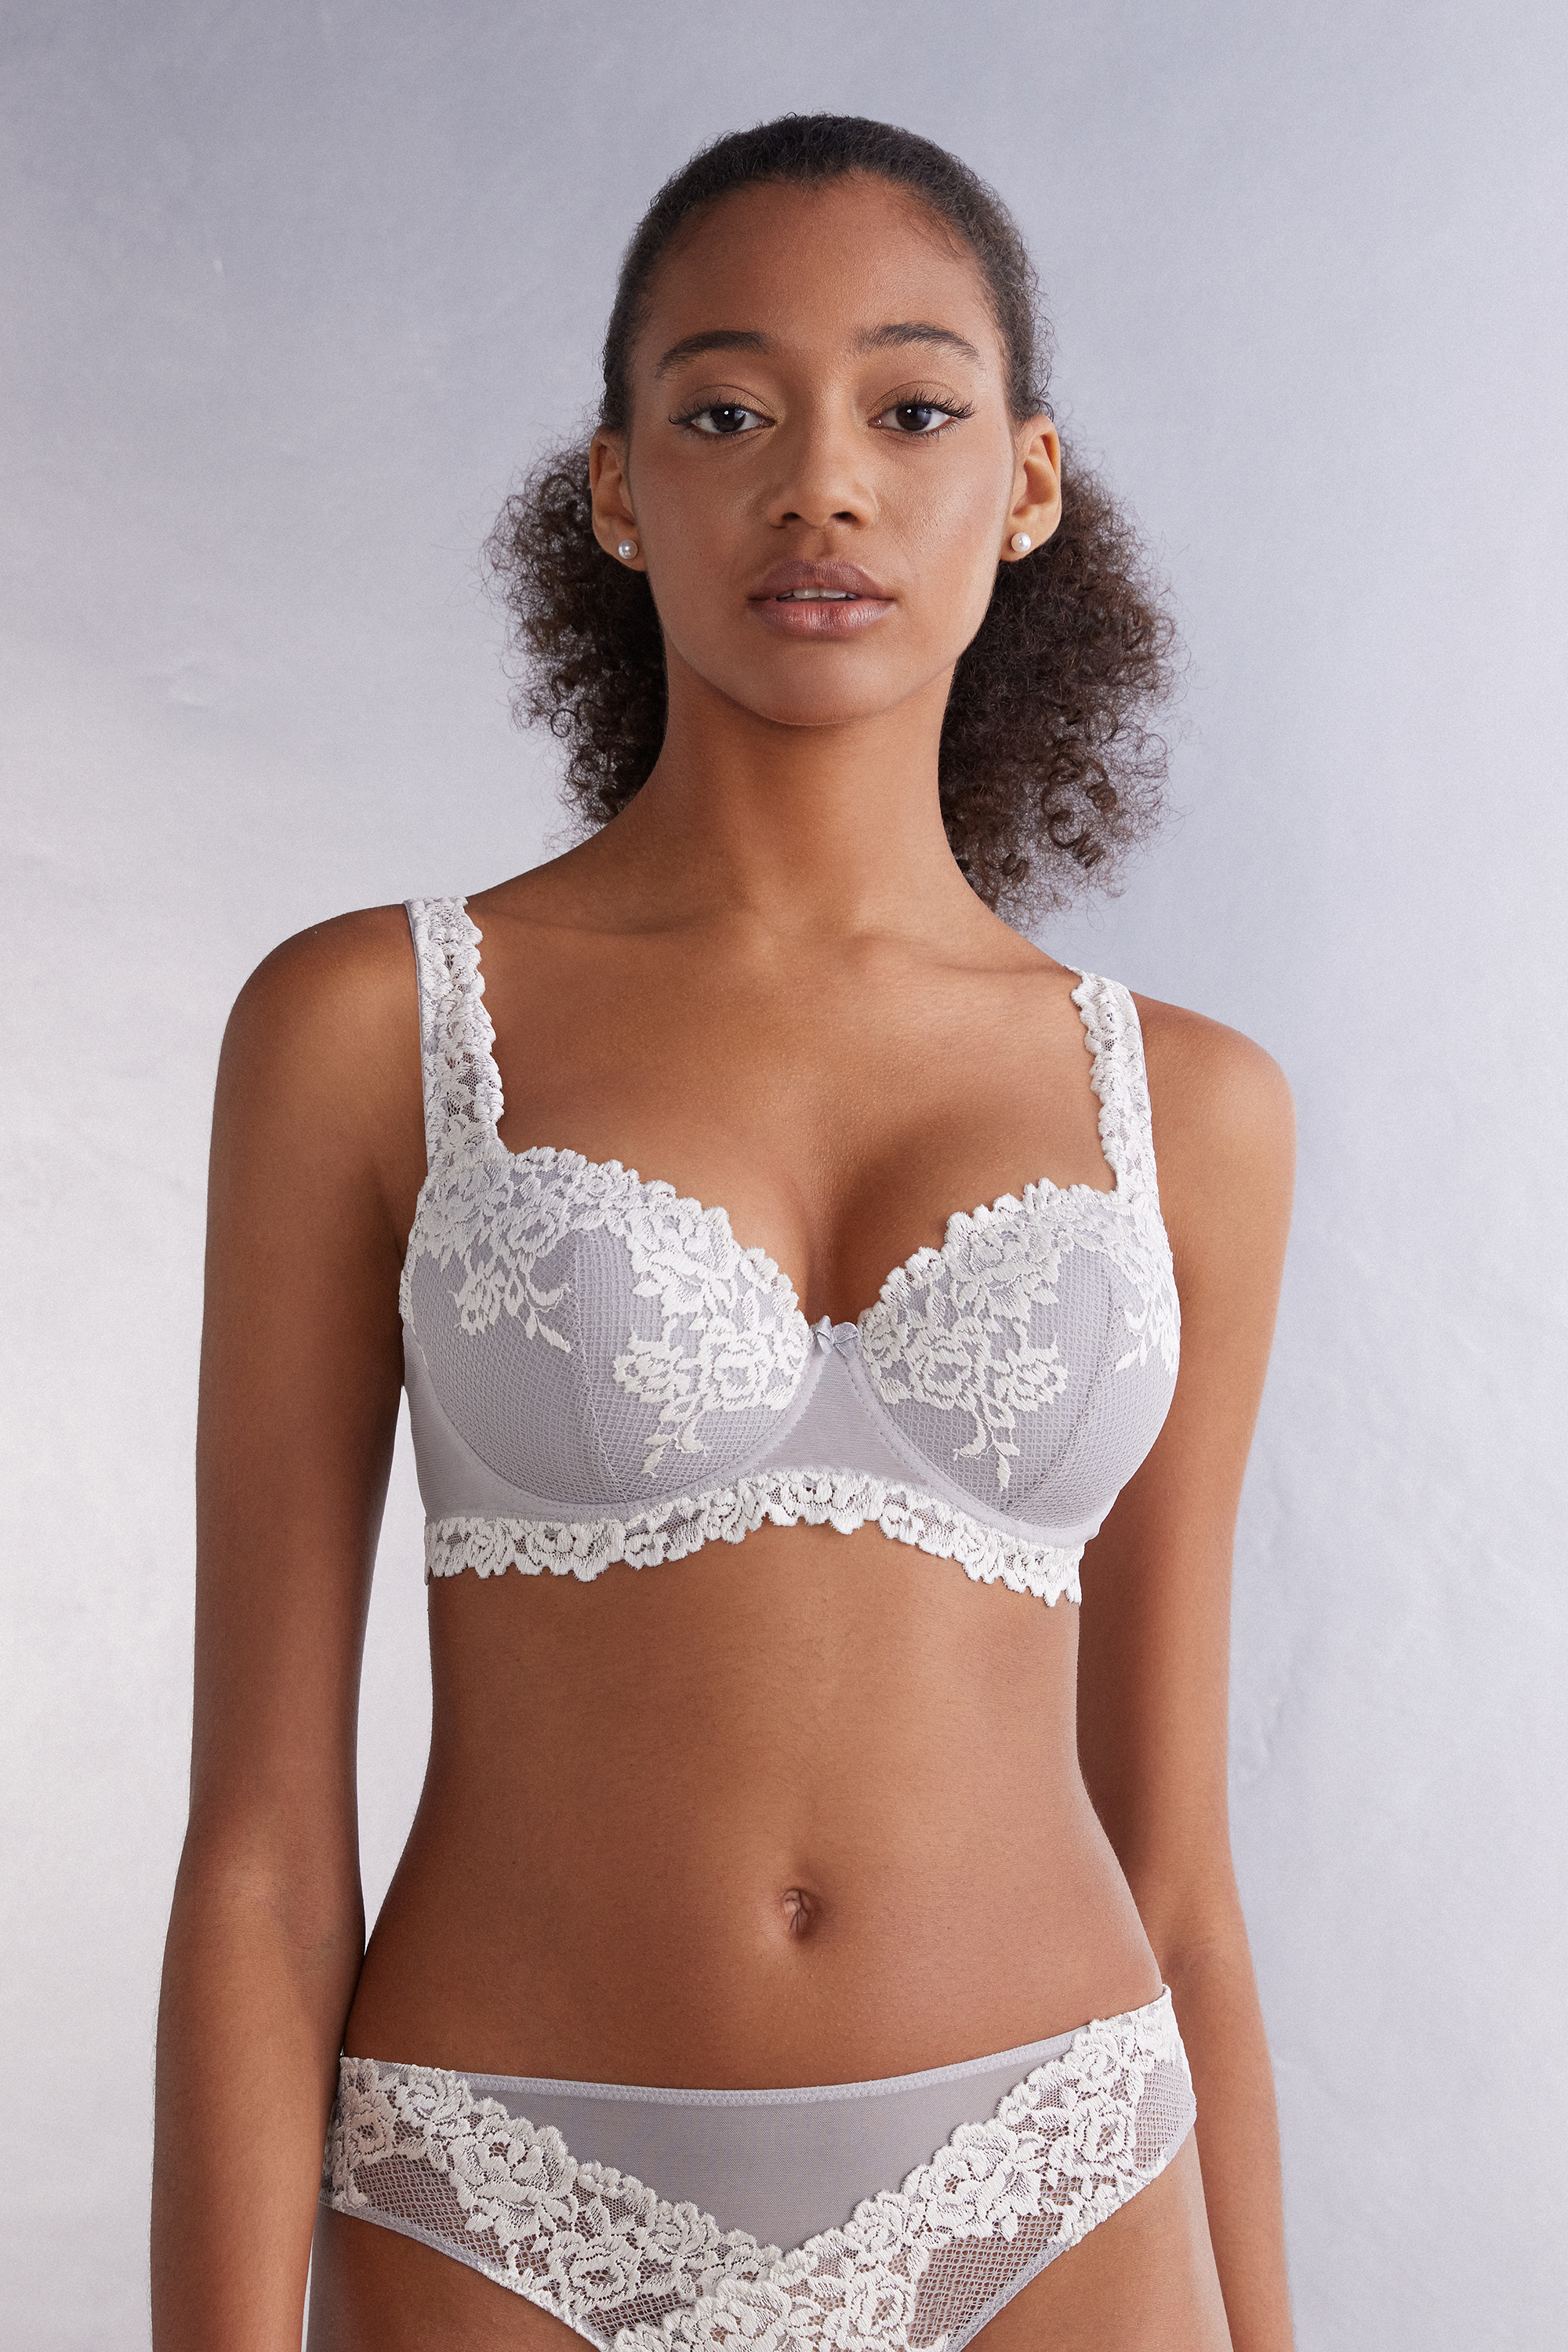 Victoria secret bra size size 34DDD - Bras, Facebook Marketplace